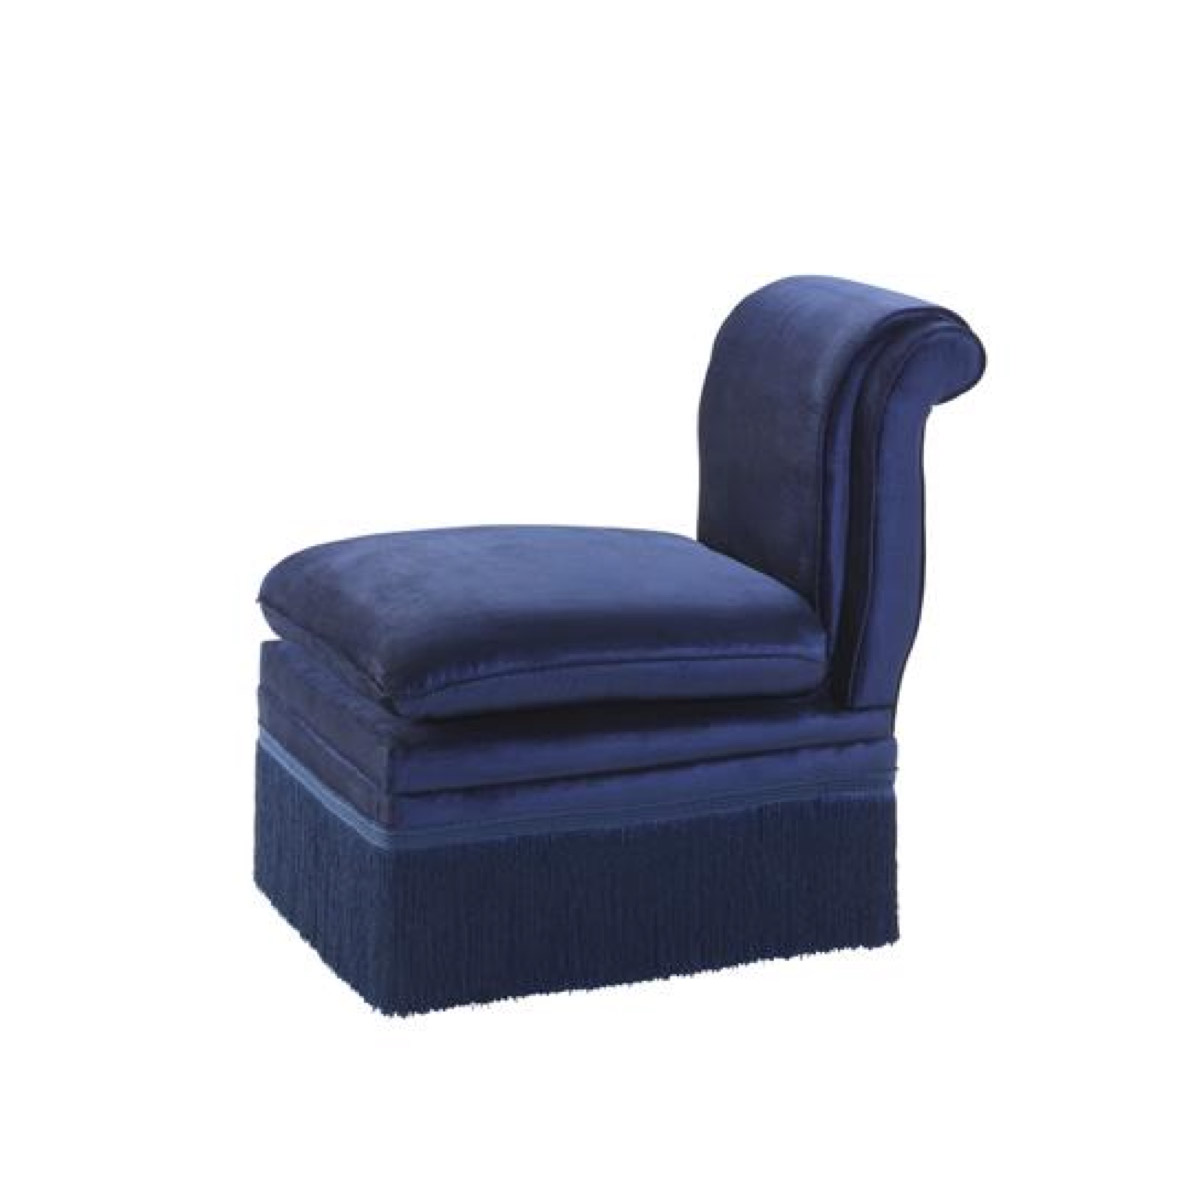 Boucheron chair